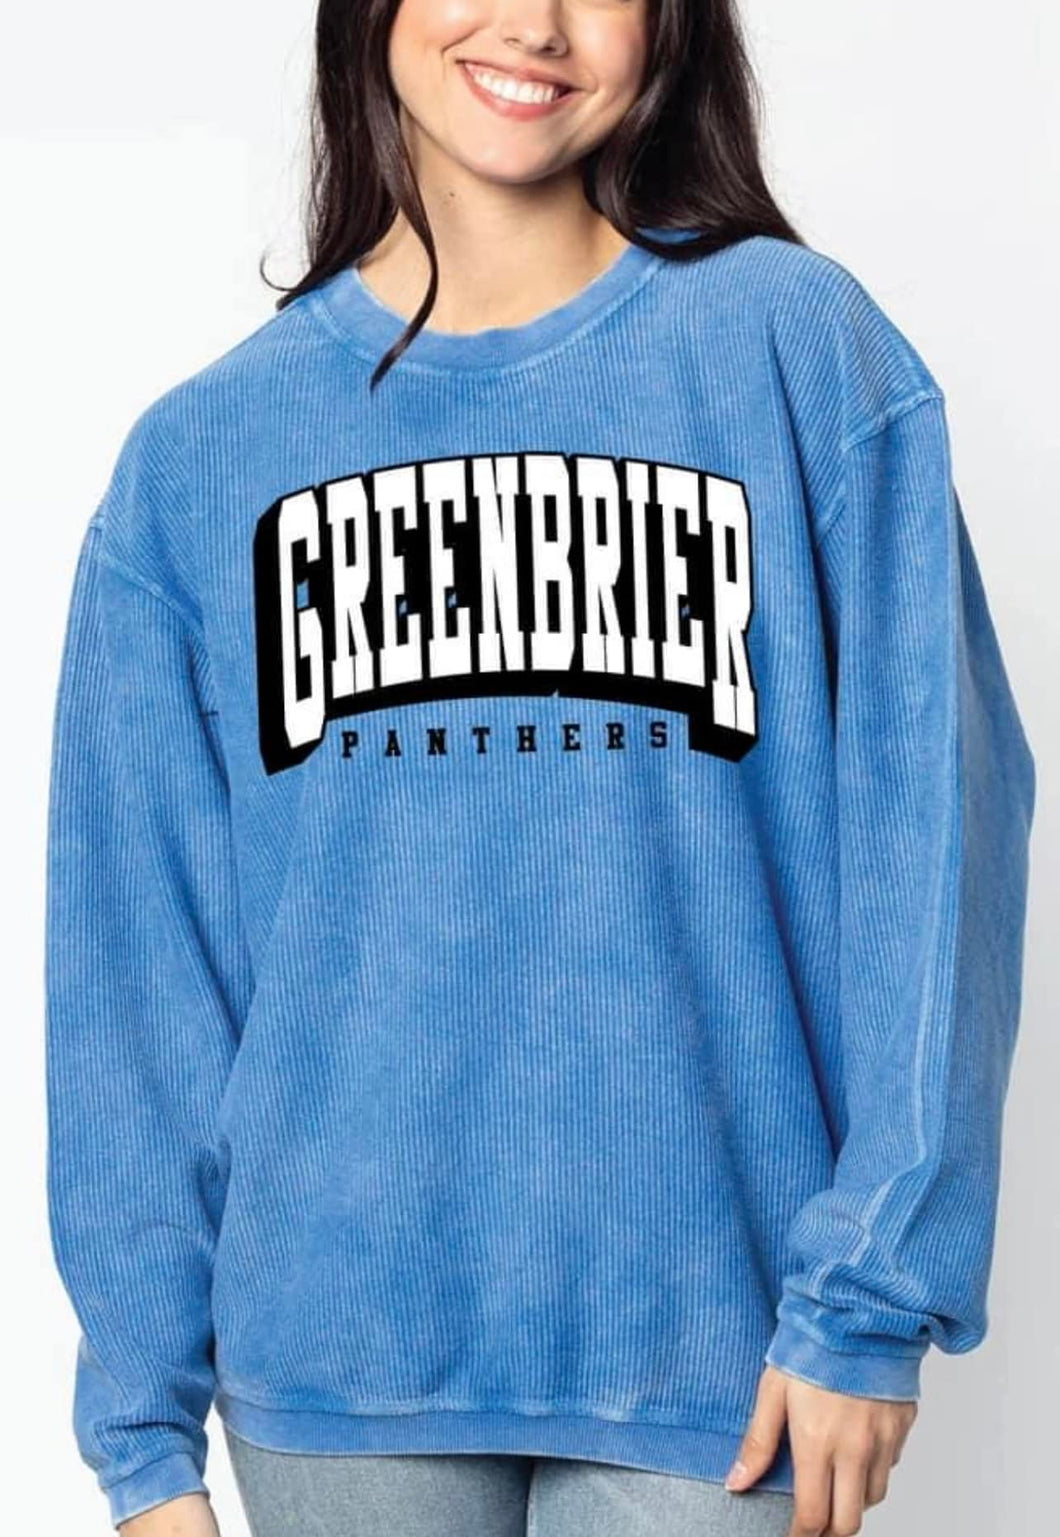 Preorder Corded Greenbrier Panthers Sweatshirt